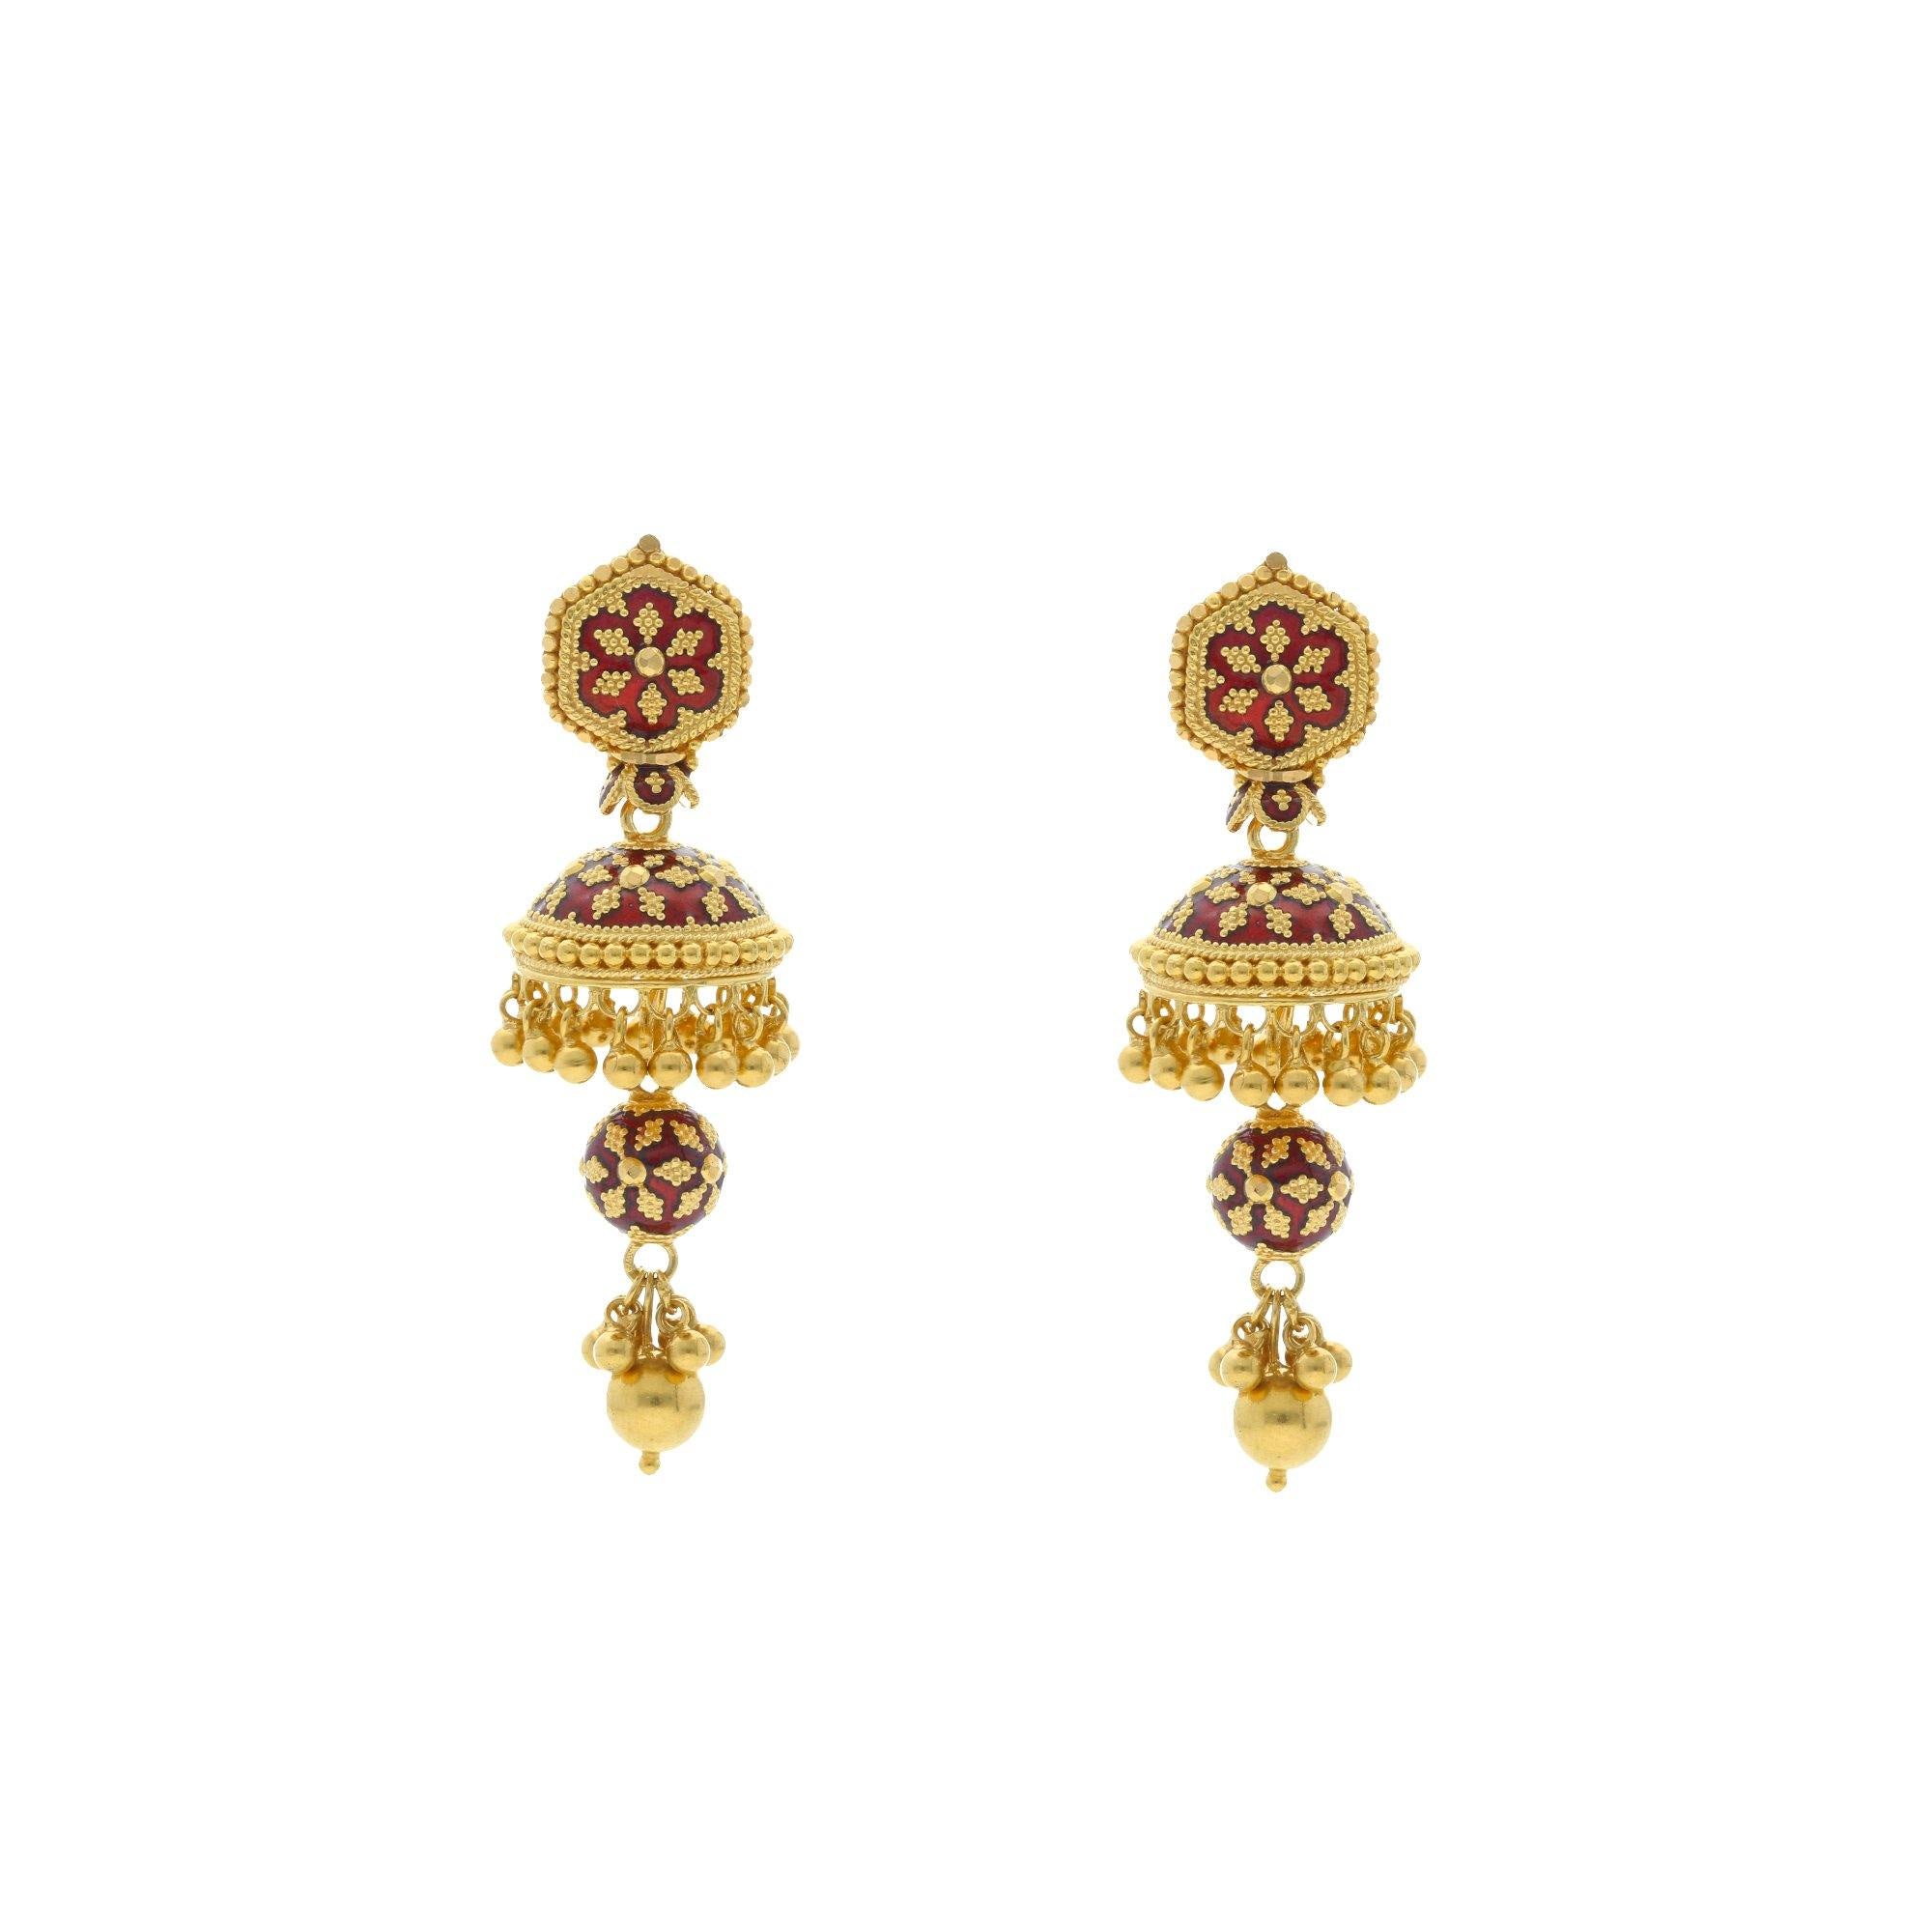 Gold Earring Designs For Daily Use – Blingvine